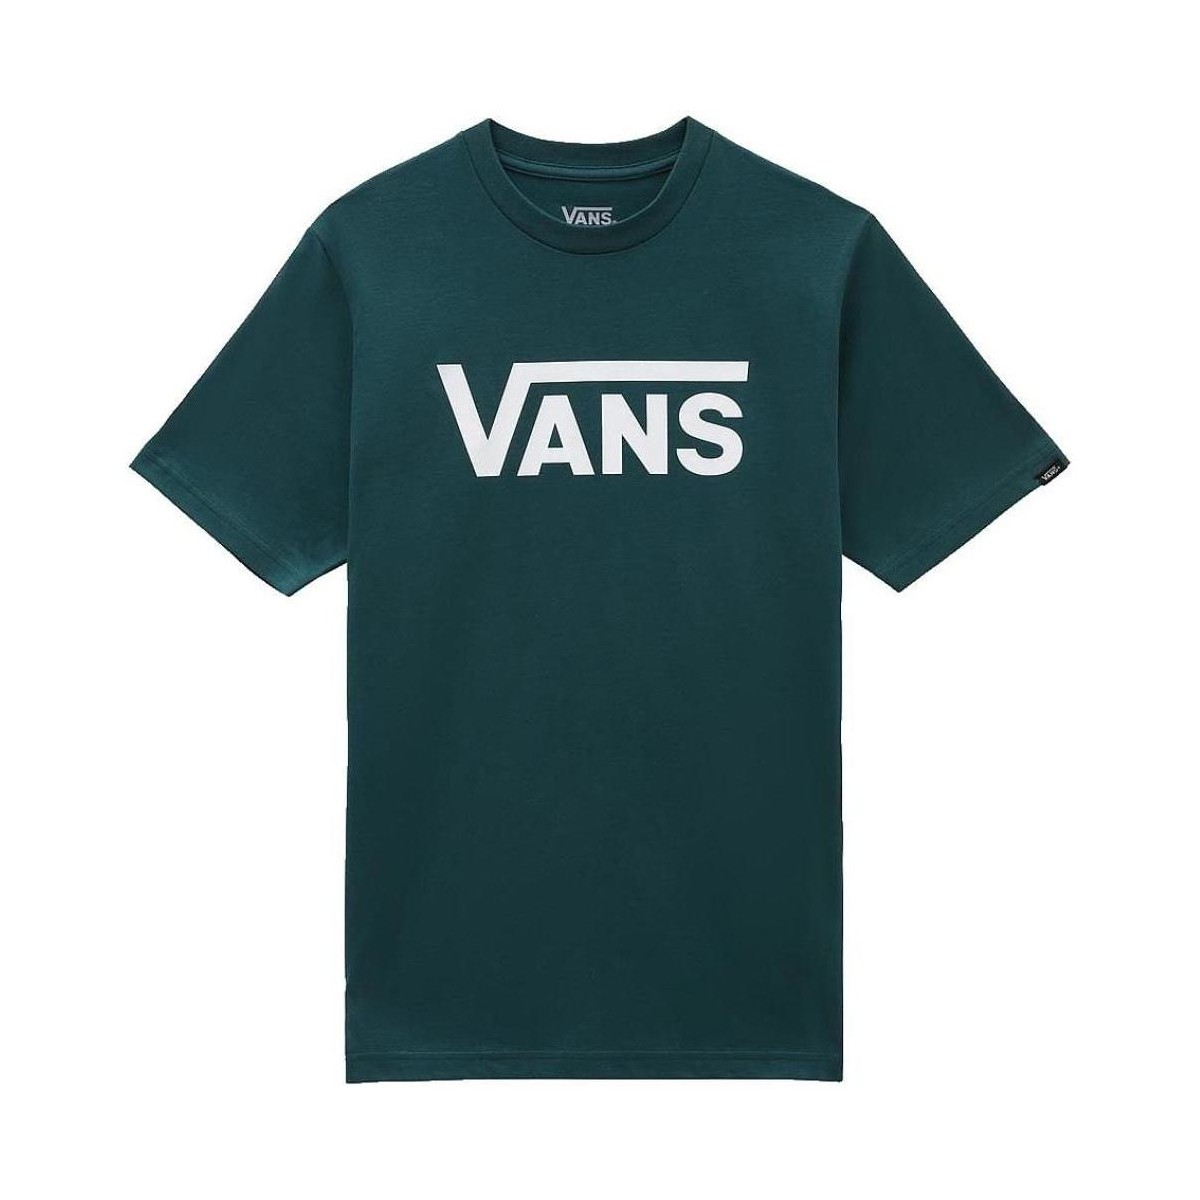 textil Pojkar T-shirts Vans  Grön